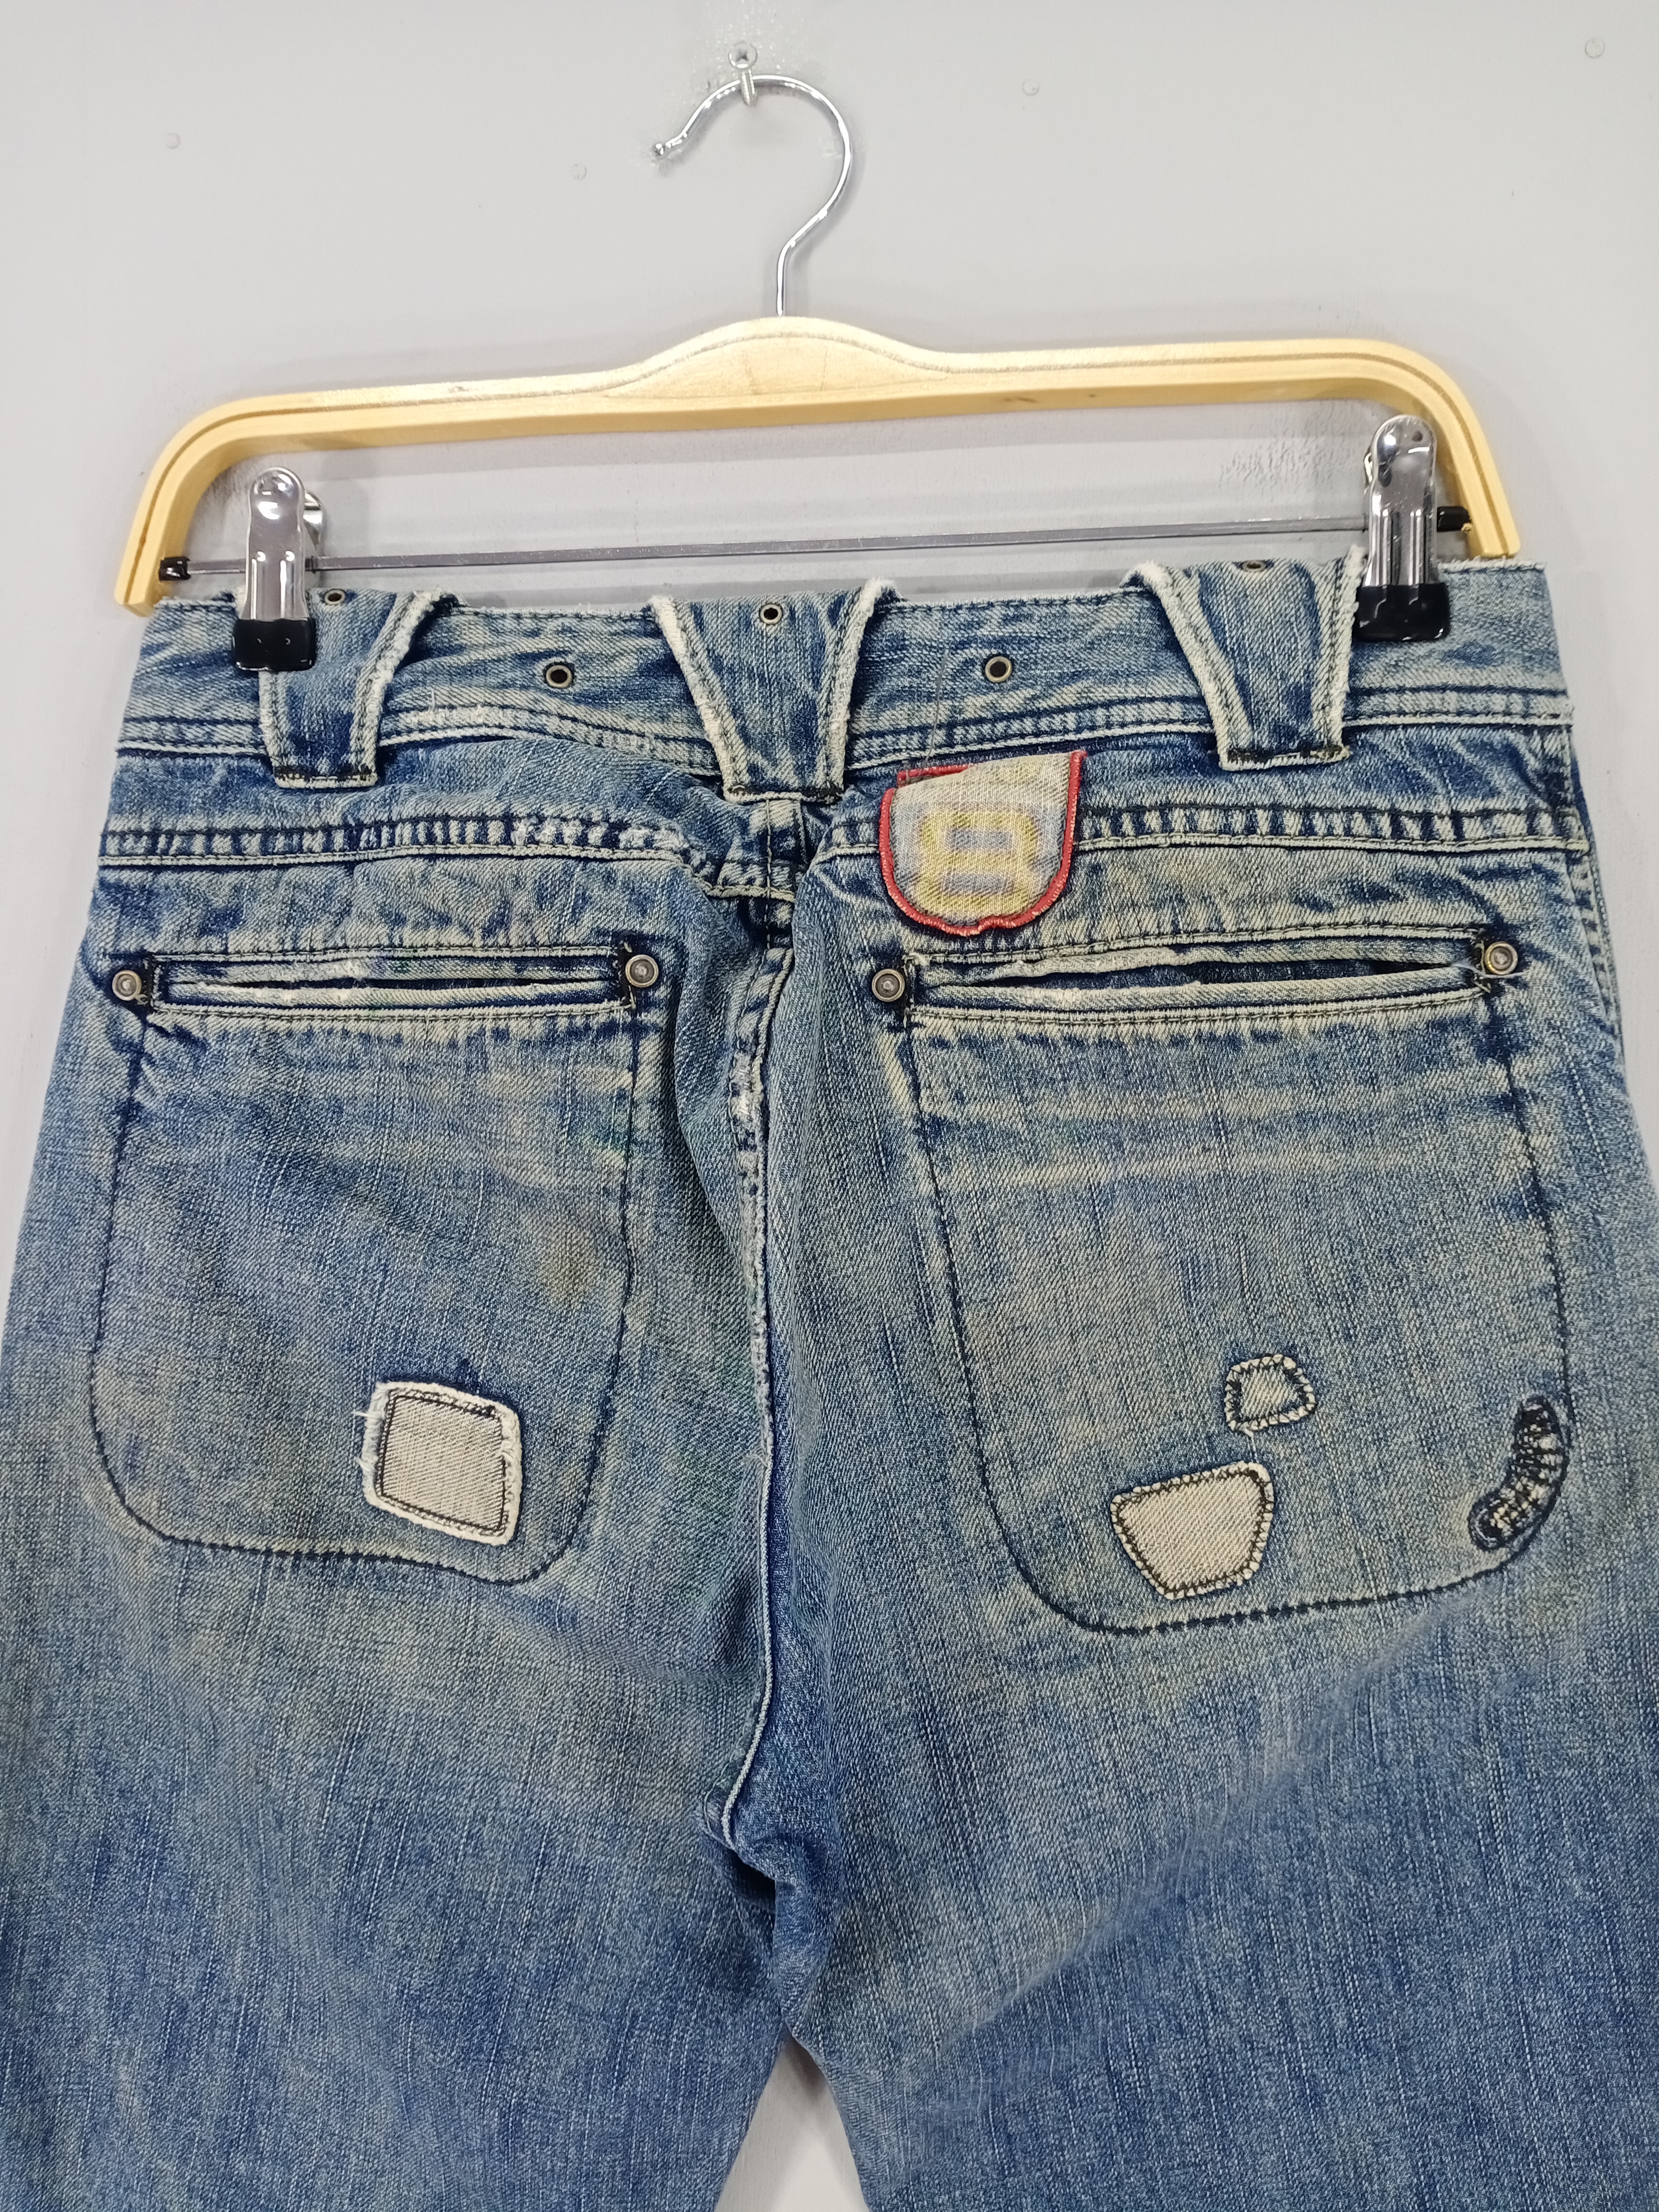 💥RARE💥Diesel Medium Wash Patches Distressed Jeans - 6